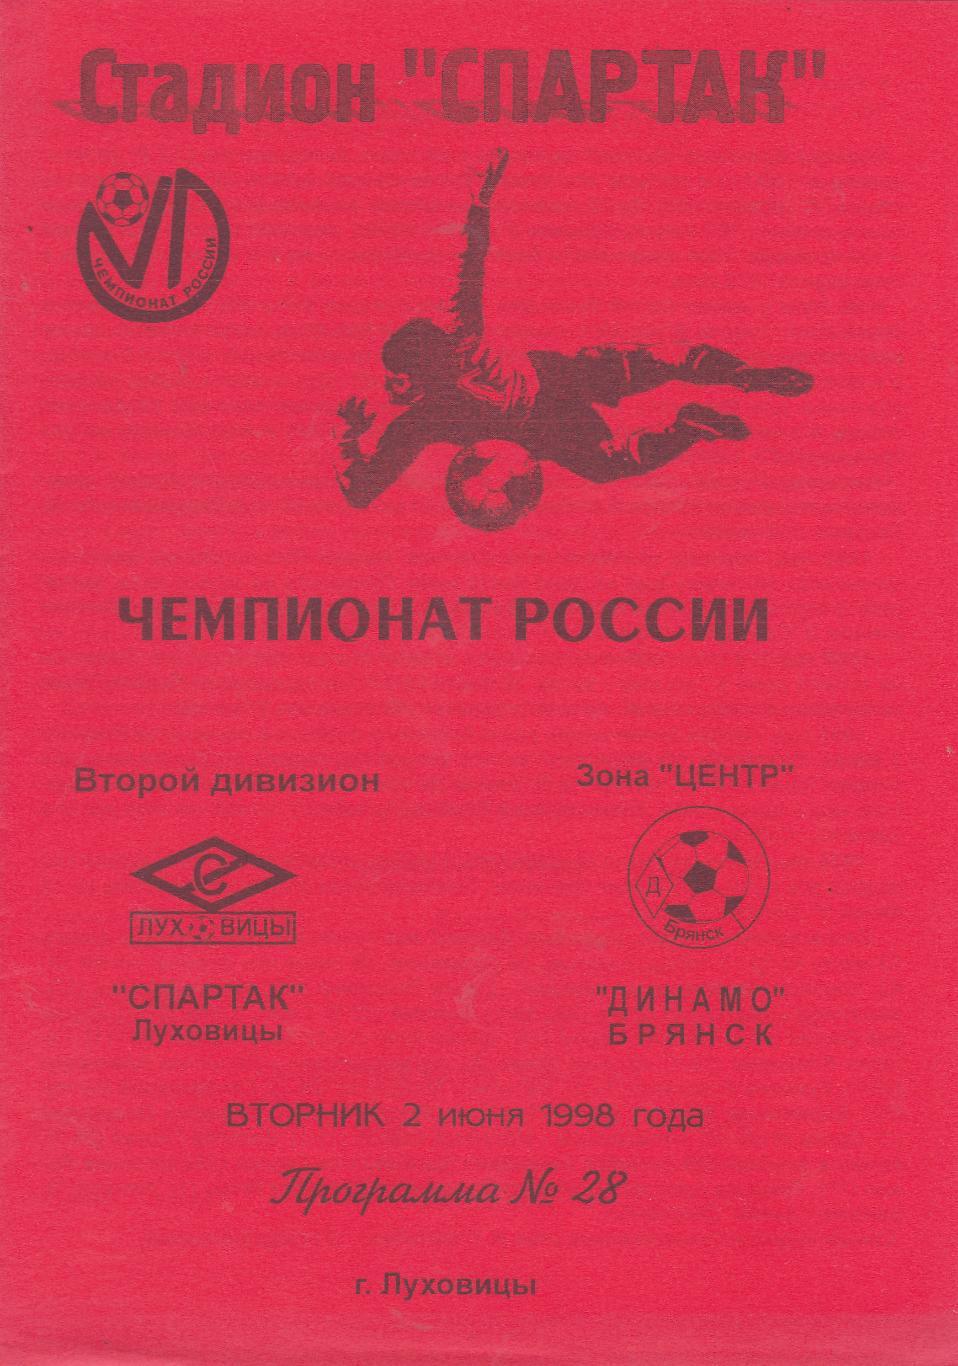 Спартак (Луховицы) - Динамо (Брянск) 02.06.1998